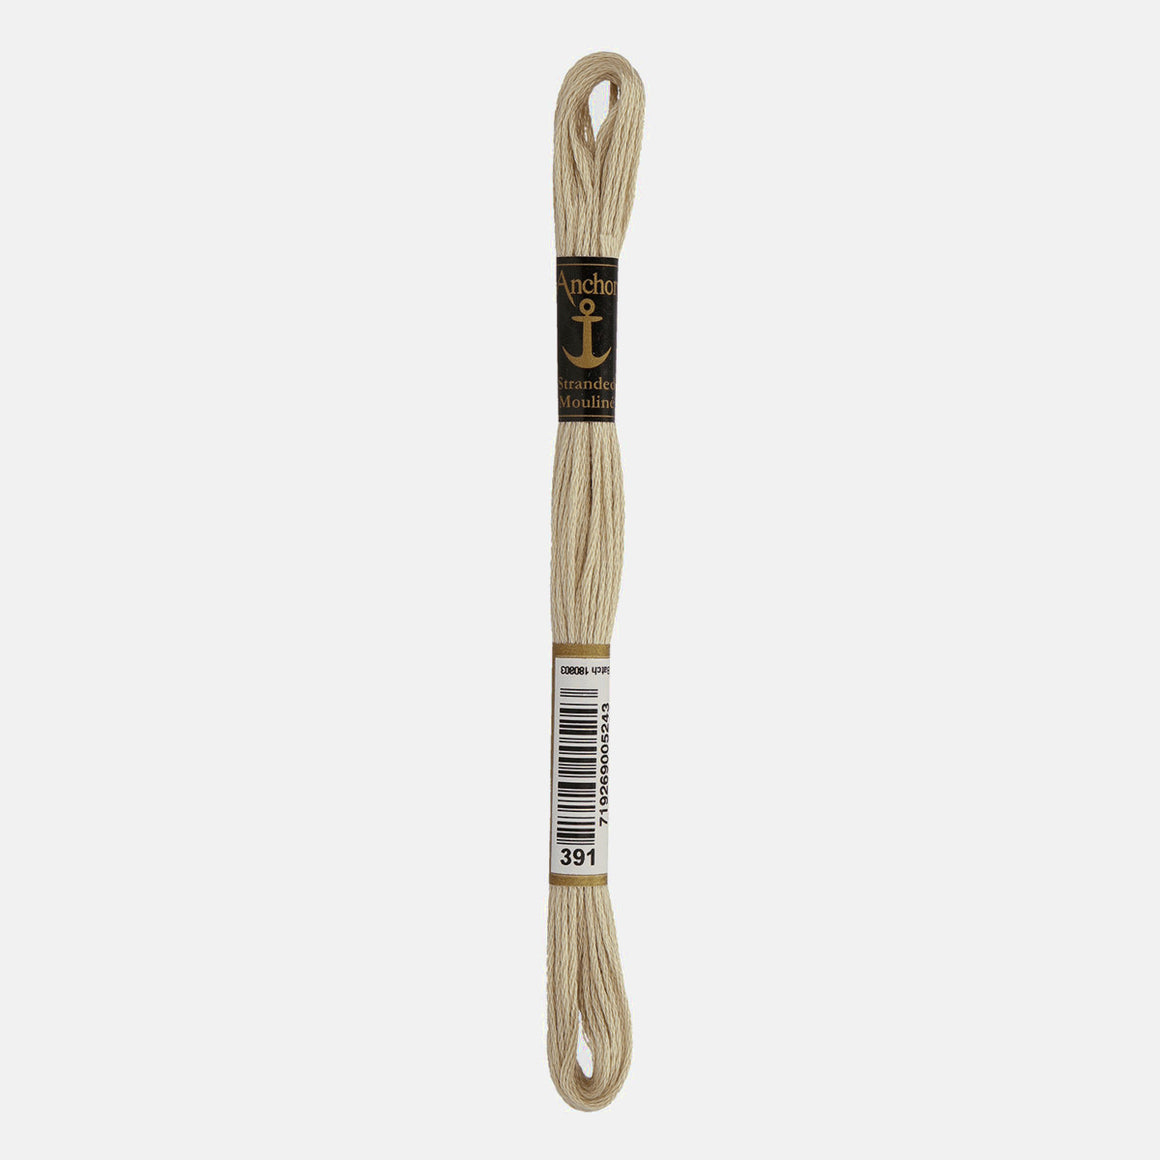 Anchor Stranded Cotton Thread (light beige #391)